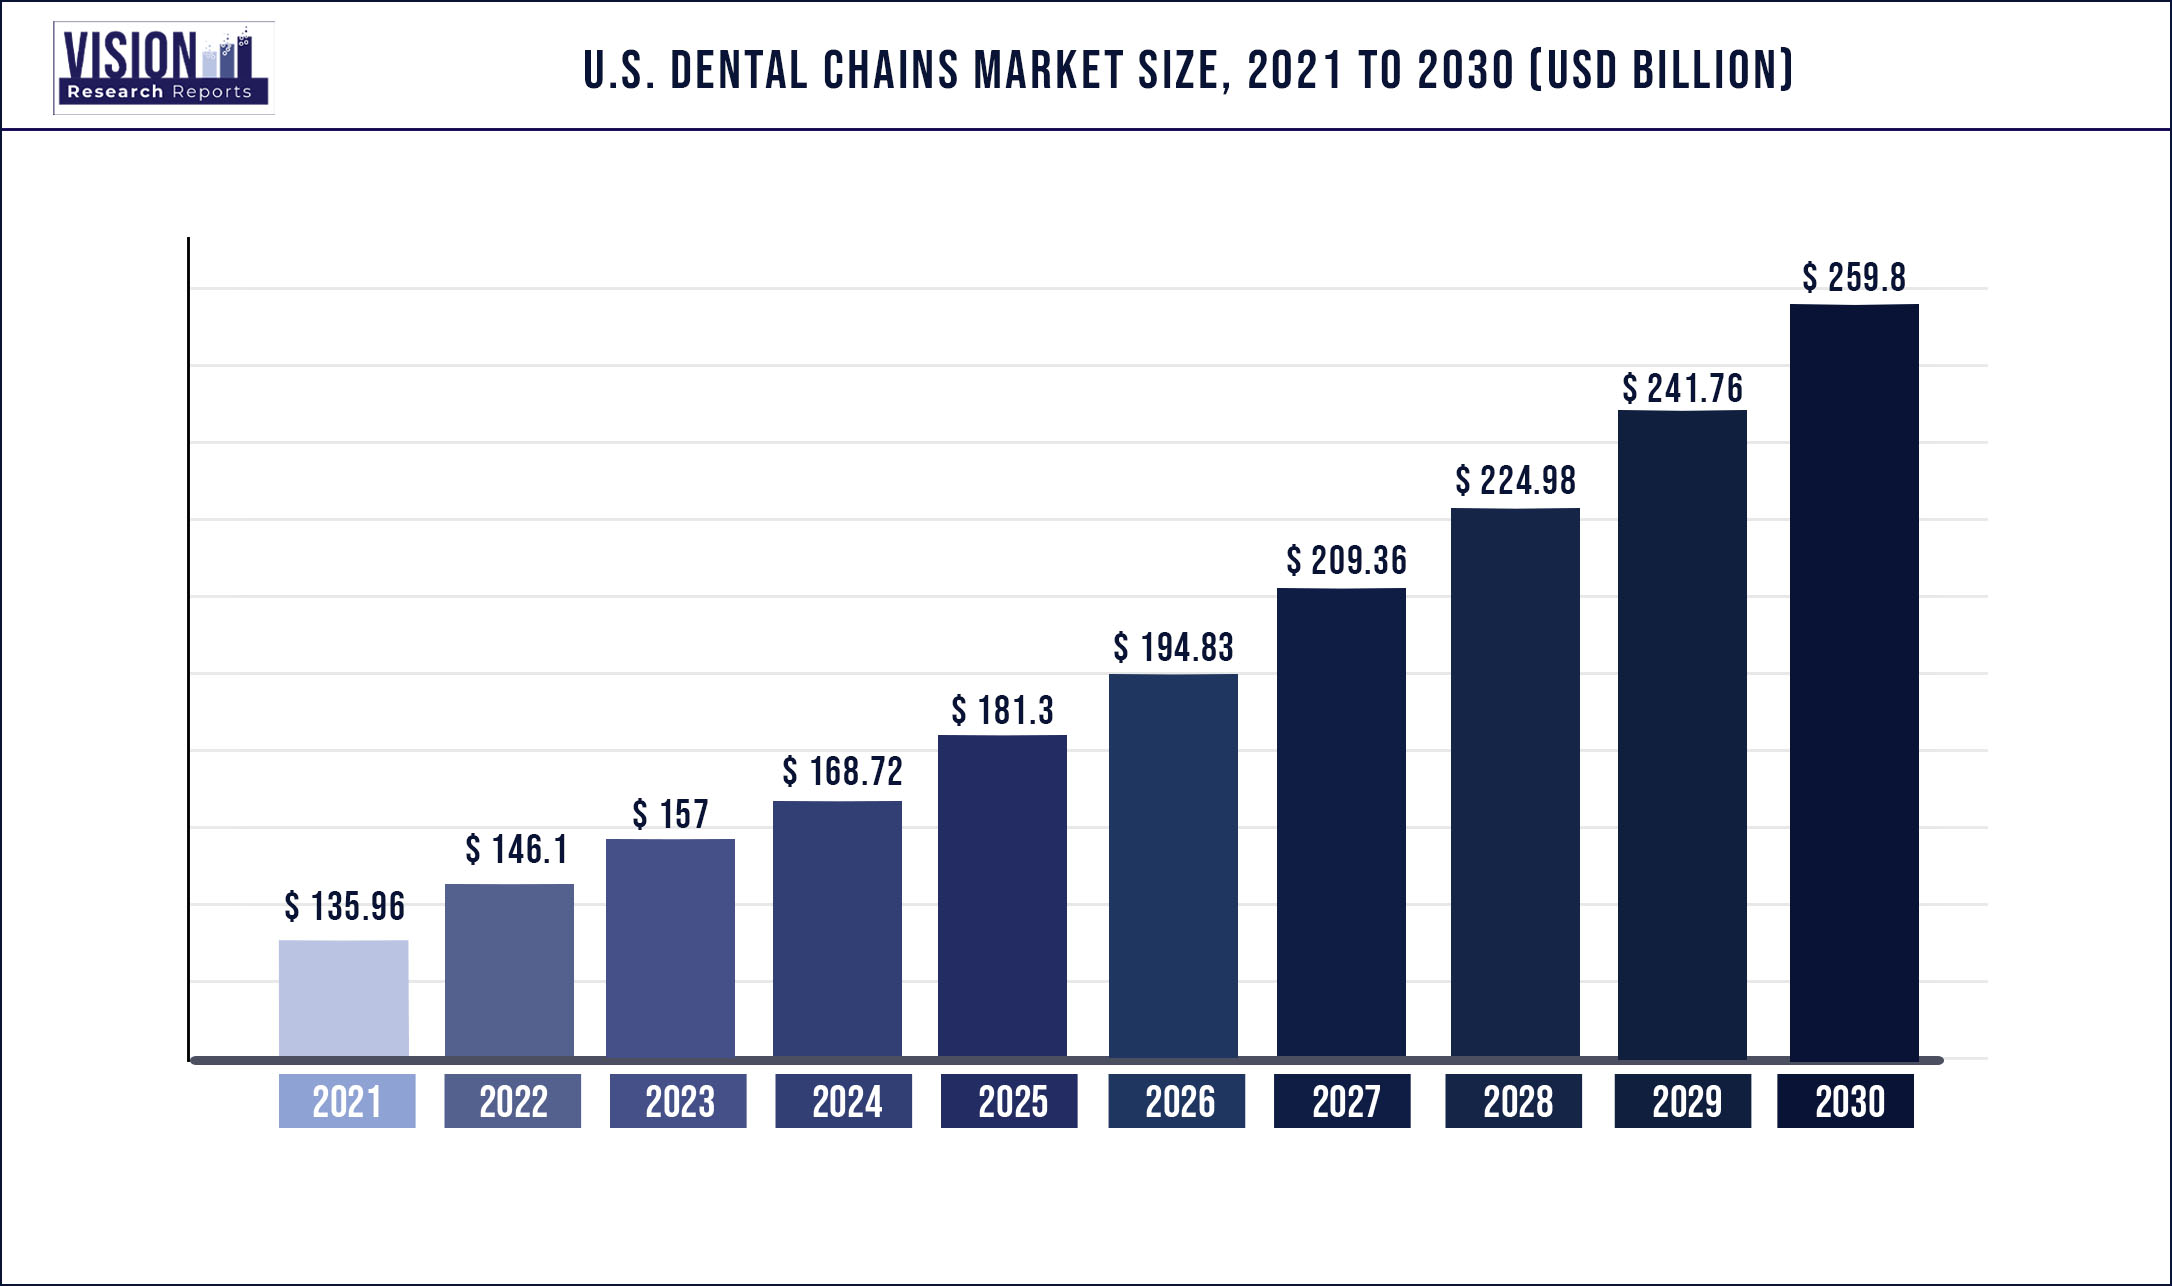 U.S. Dental Chains Market Size 2021 to 2030